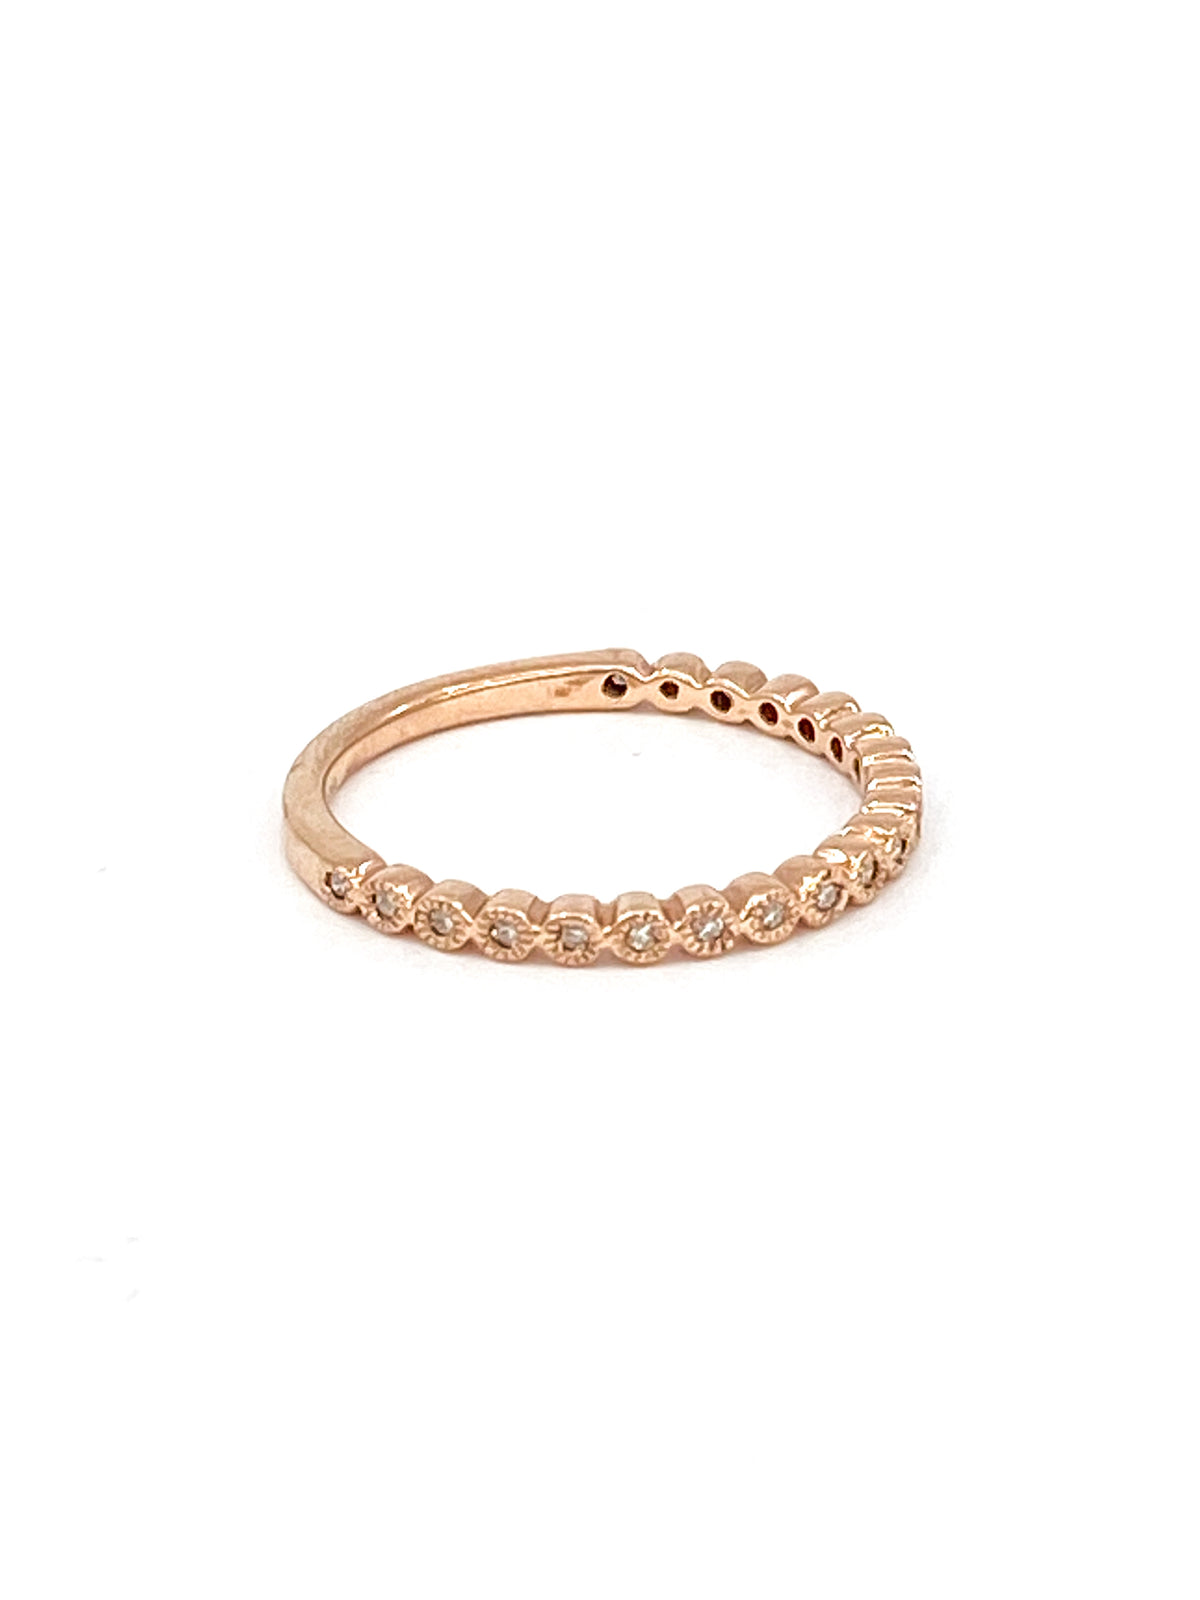 10K Rose Gold 0.10cttw Diamond Ring, size 6.5